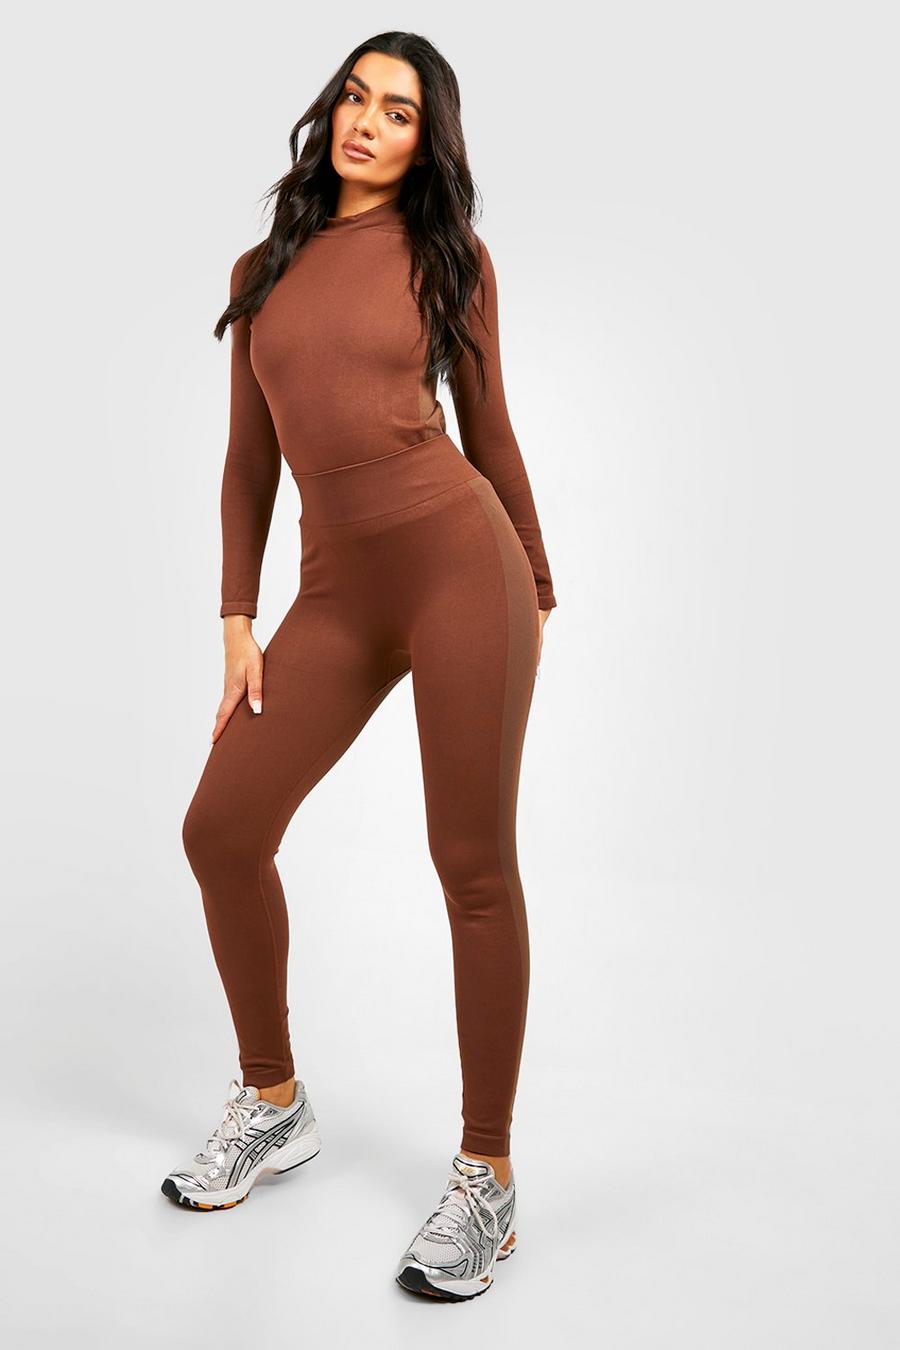 https://media.boohoo.com/i/boohoo/fzz38371_chocolate_xl/female-chocolate-thick-seamfree-gym-leggings/?w=900&qlt=default&fmt.jp2.qlt=70&fmt=auto&sm=fit